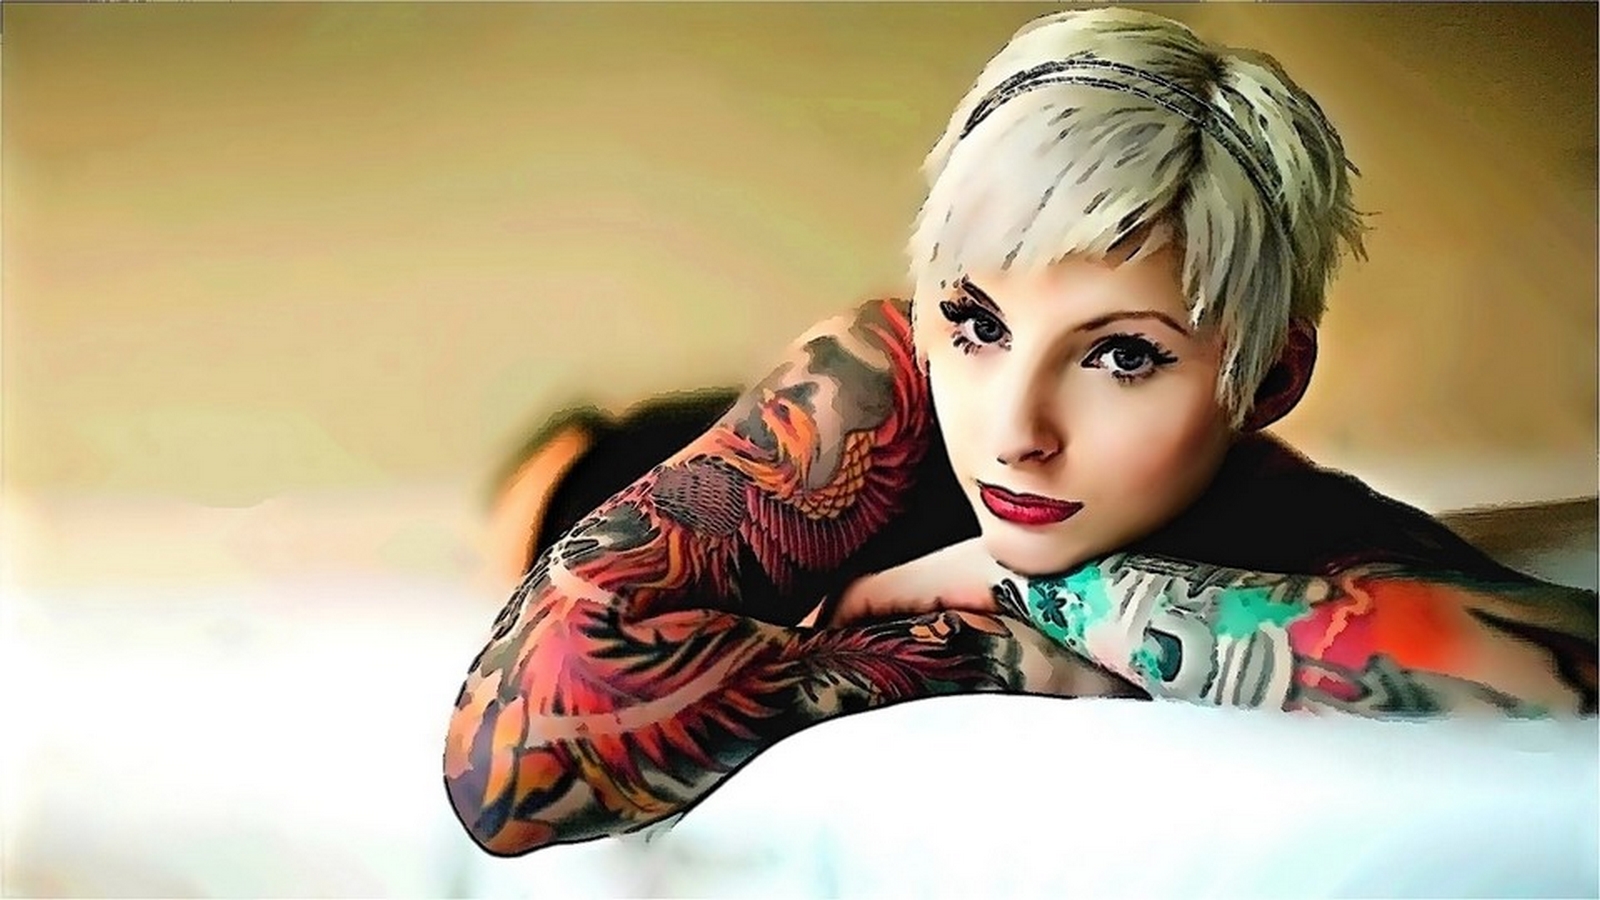 46+] Tattoo Women Wallpapers Free - WallpaperSafari